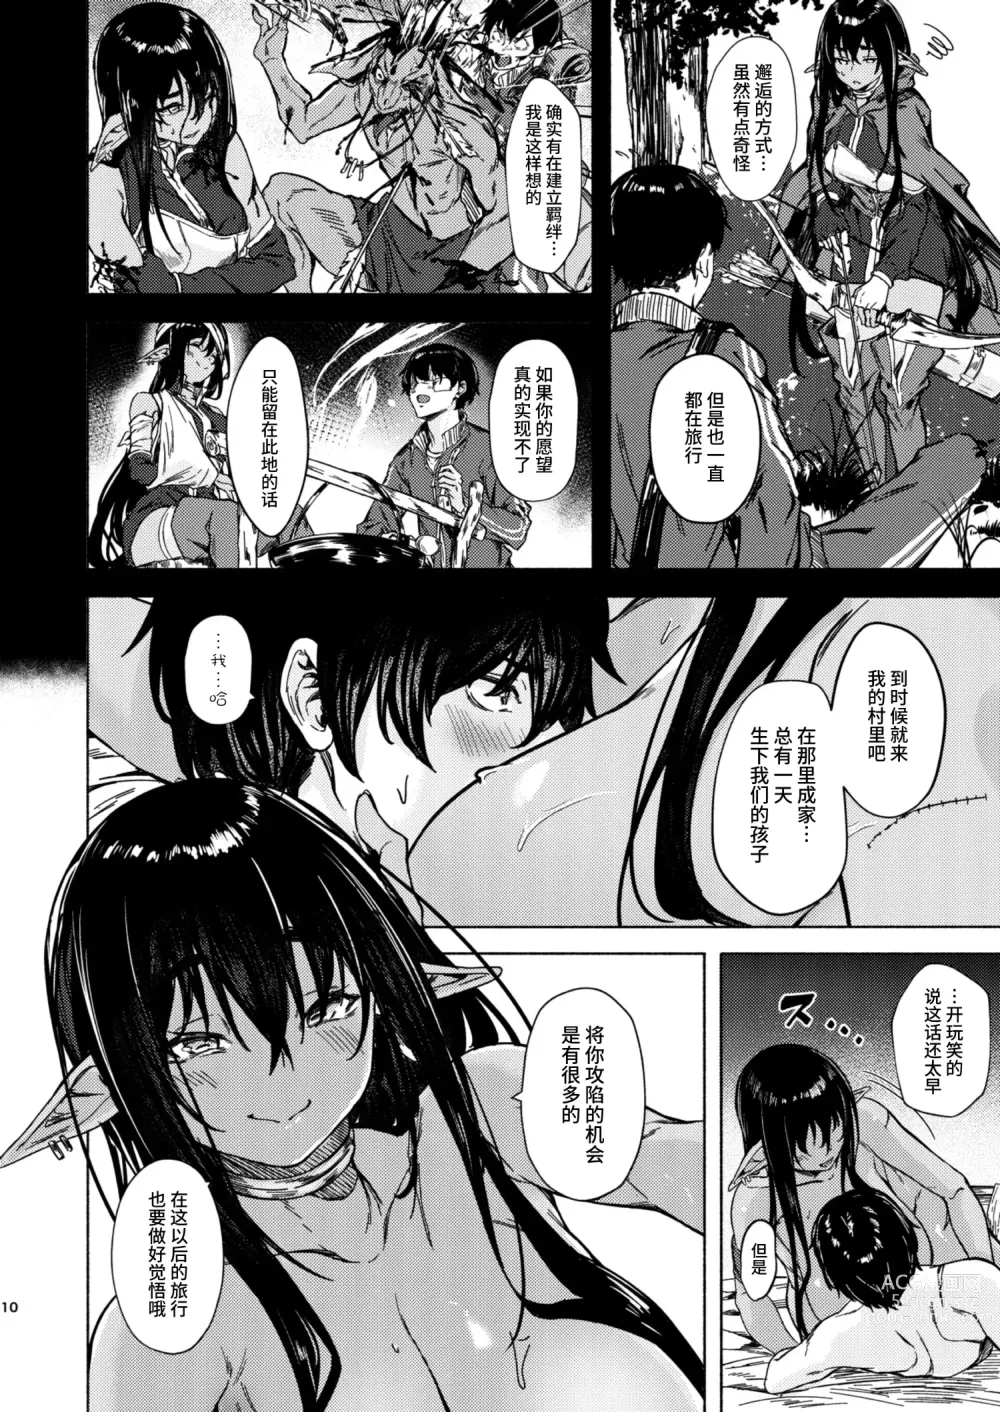 Page 13 of doujinshi 直到雨停。